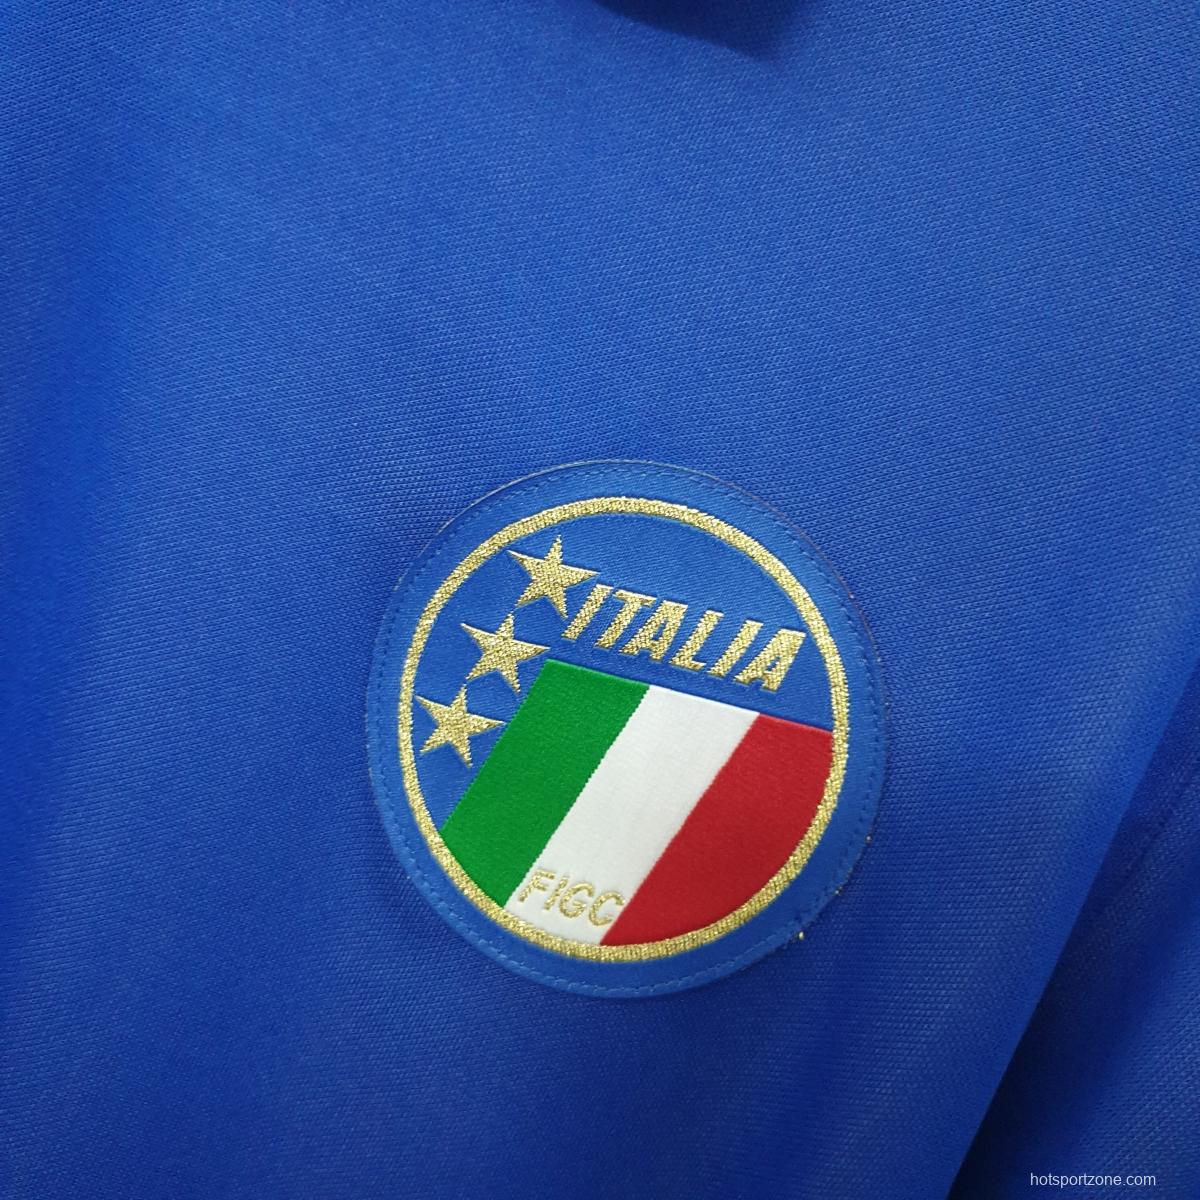 retro shirt Italy 1990 home Soccer Jersey